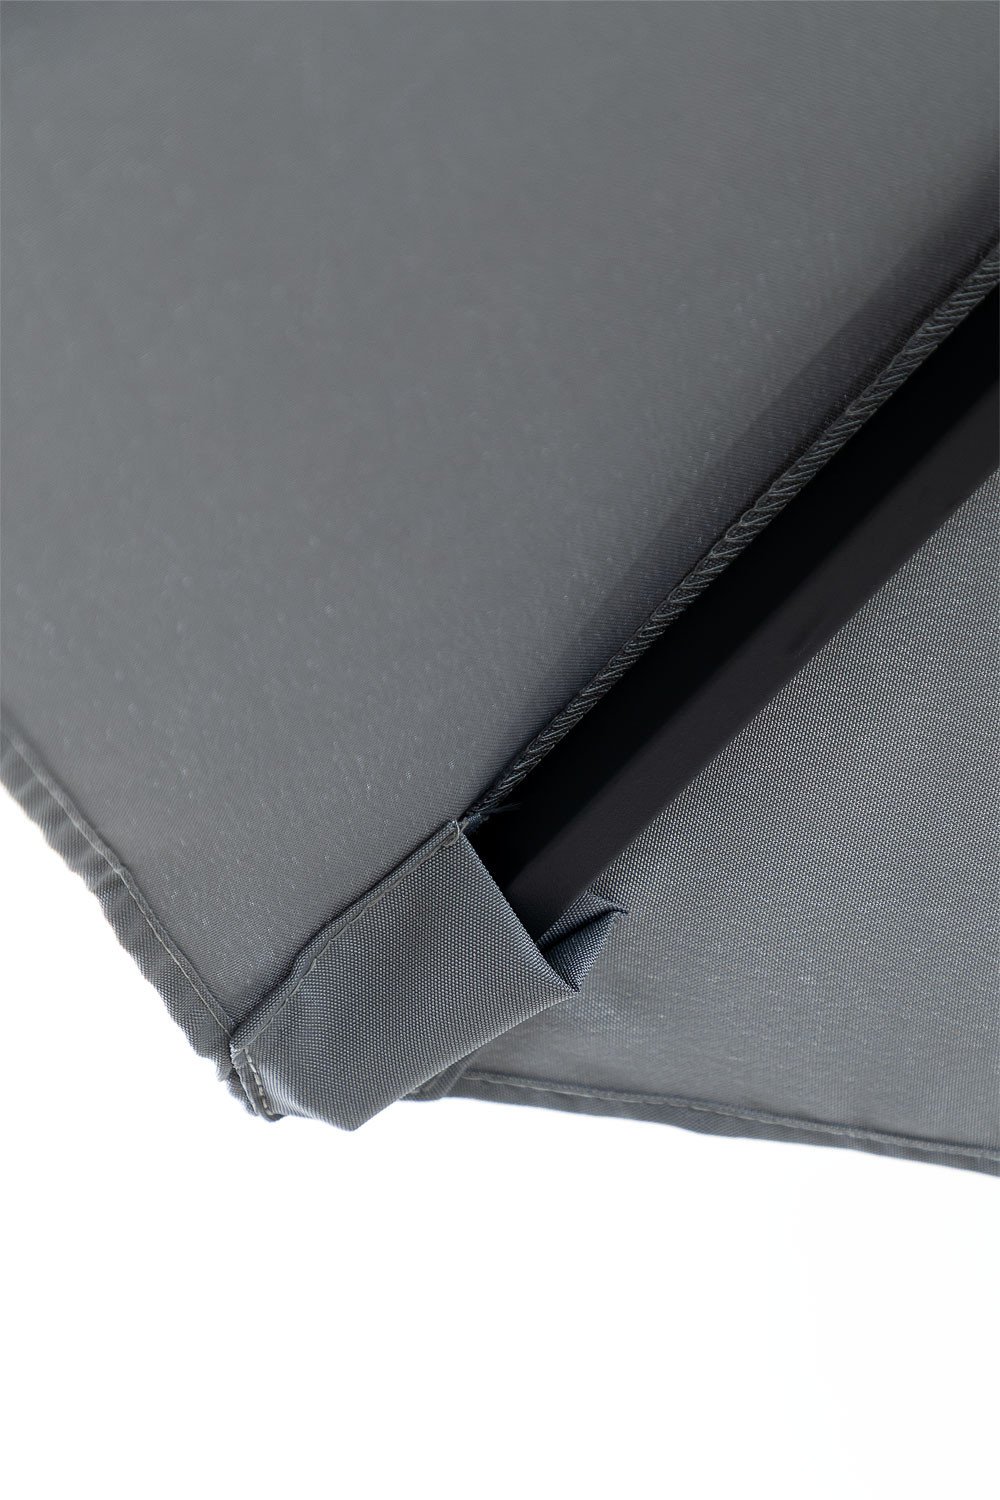 Parasol Fabric & Steel (Ø207 cm) Masey - SKLUM